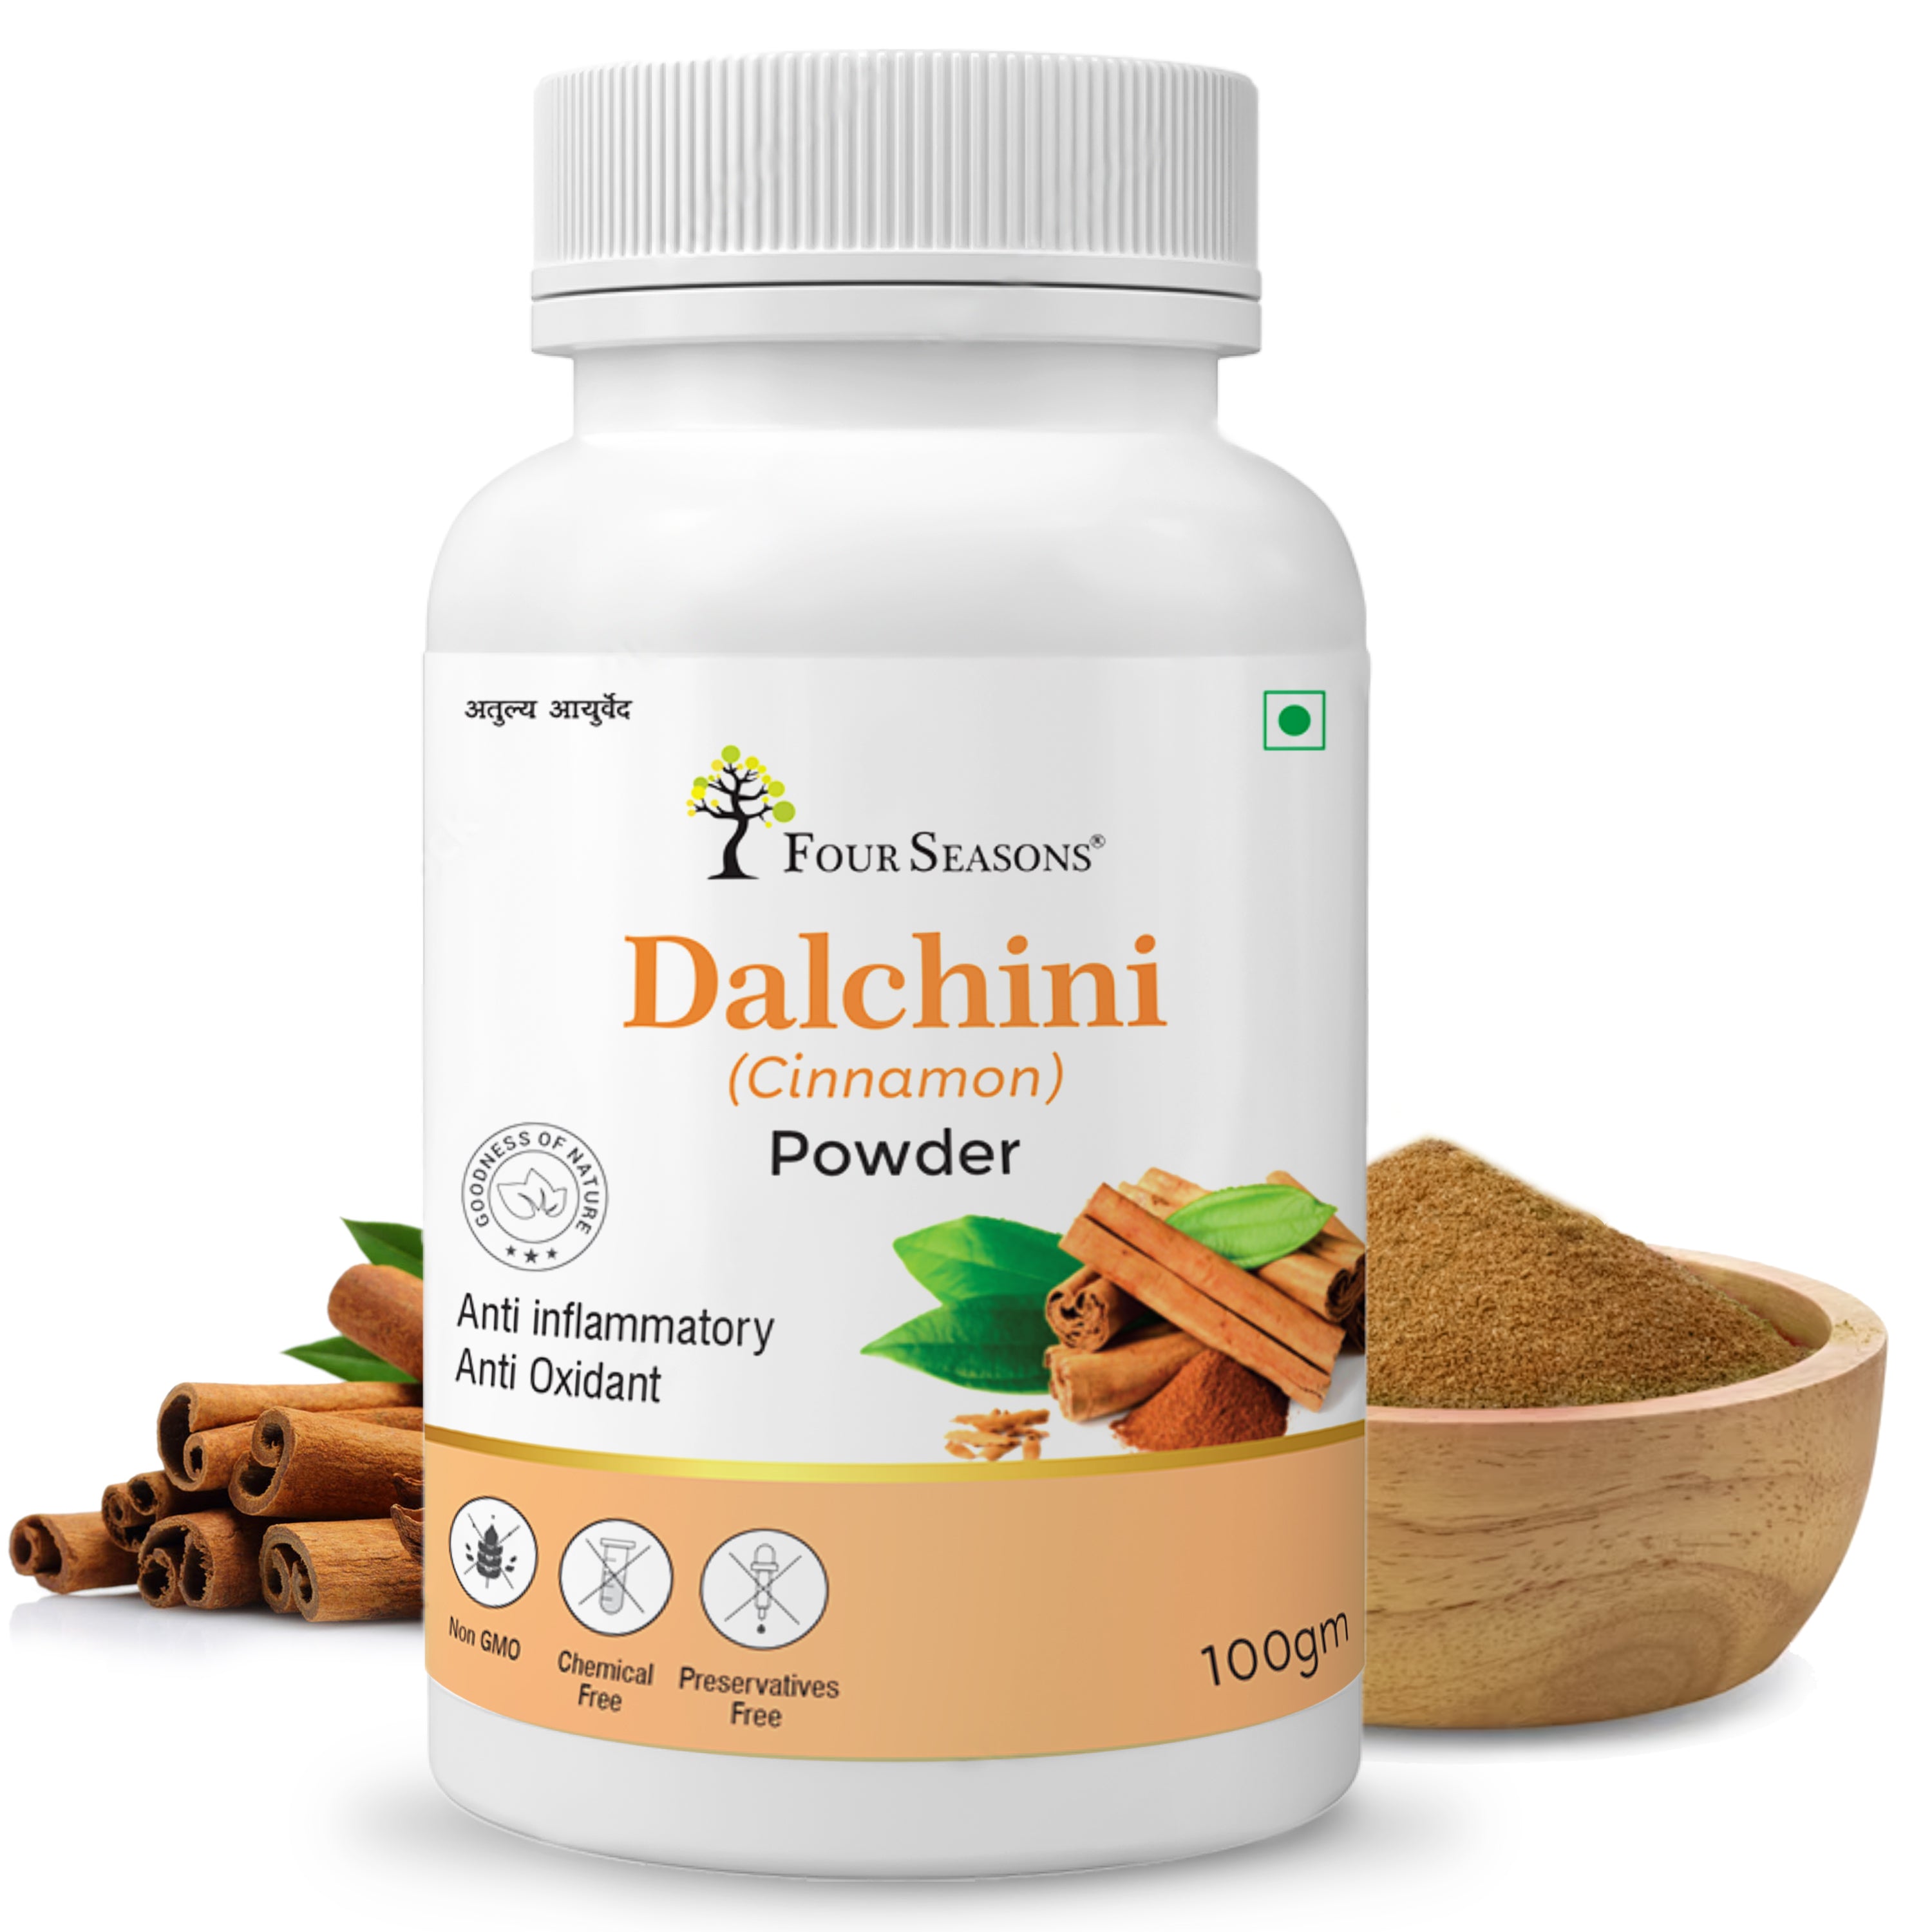 Dalchini Powder